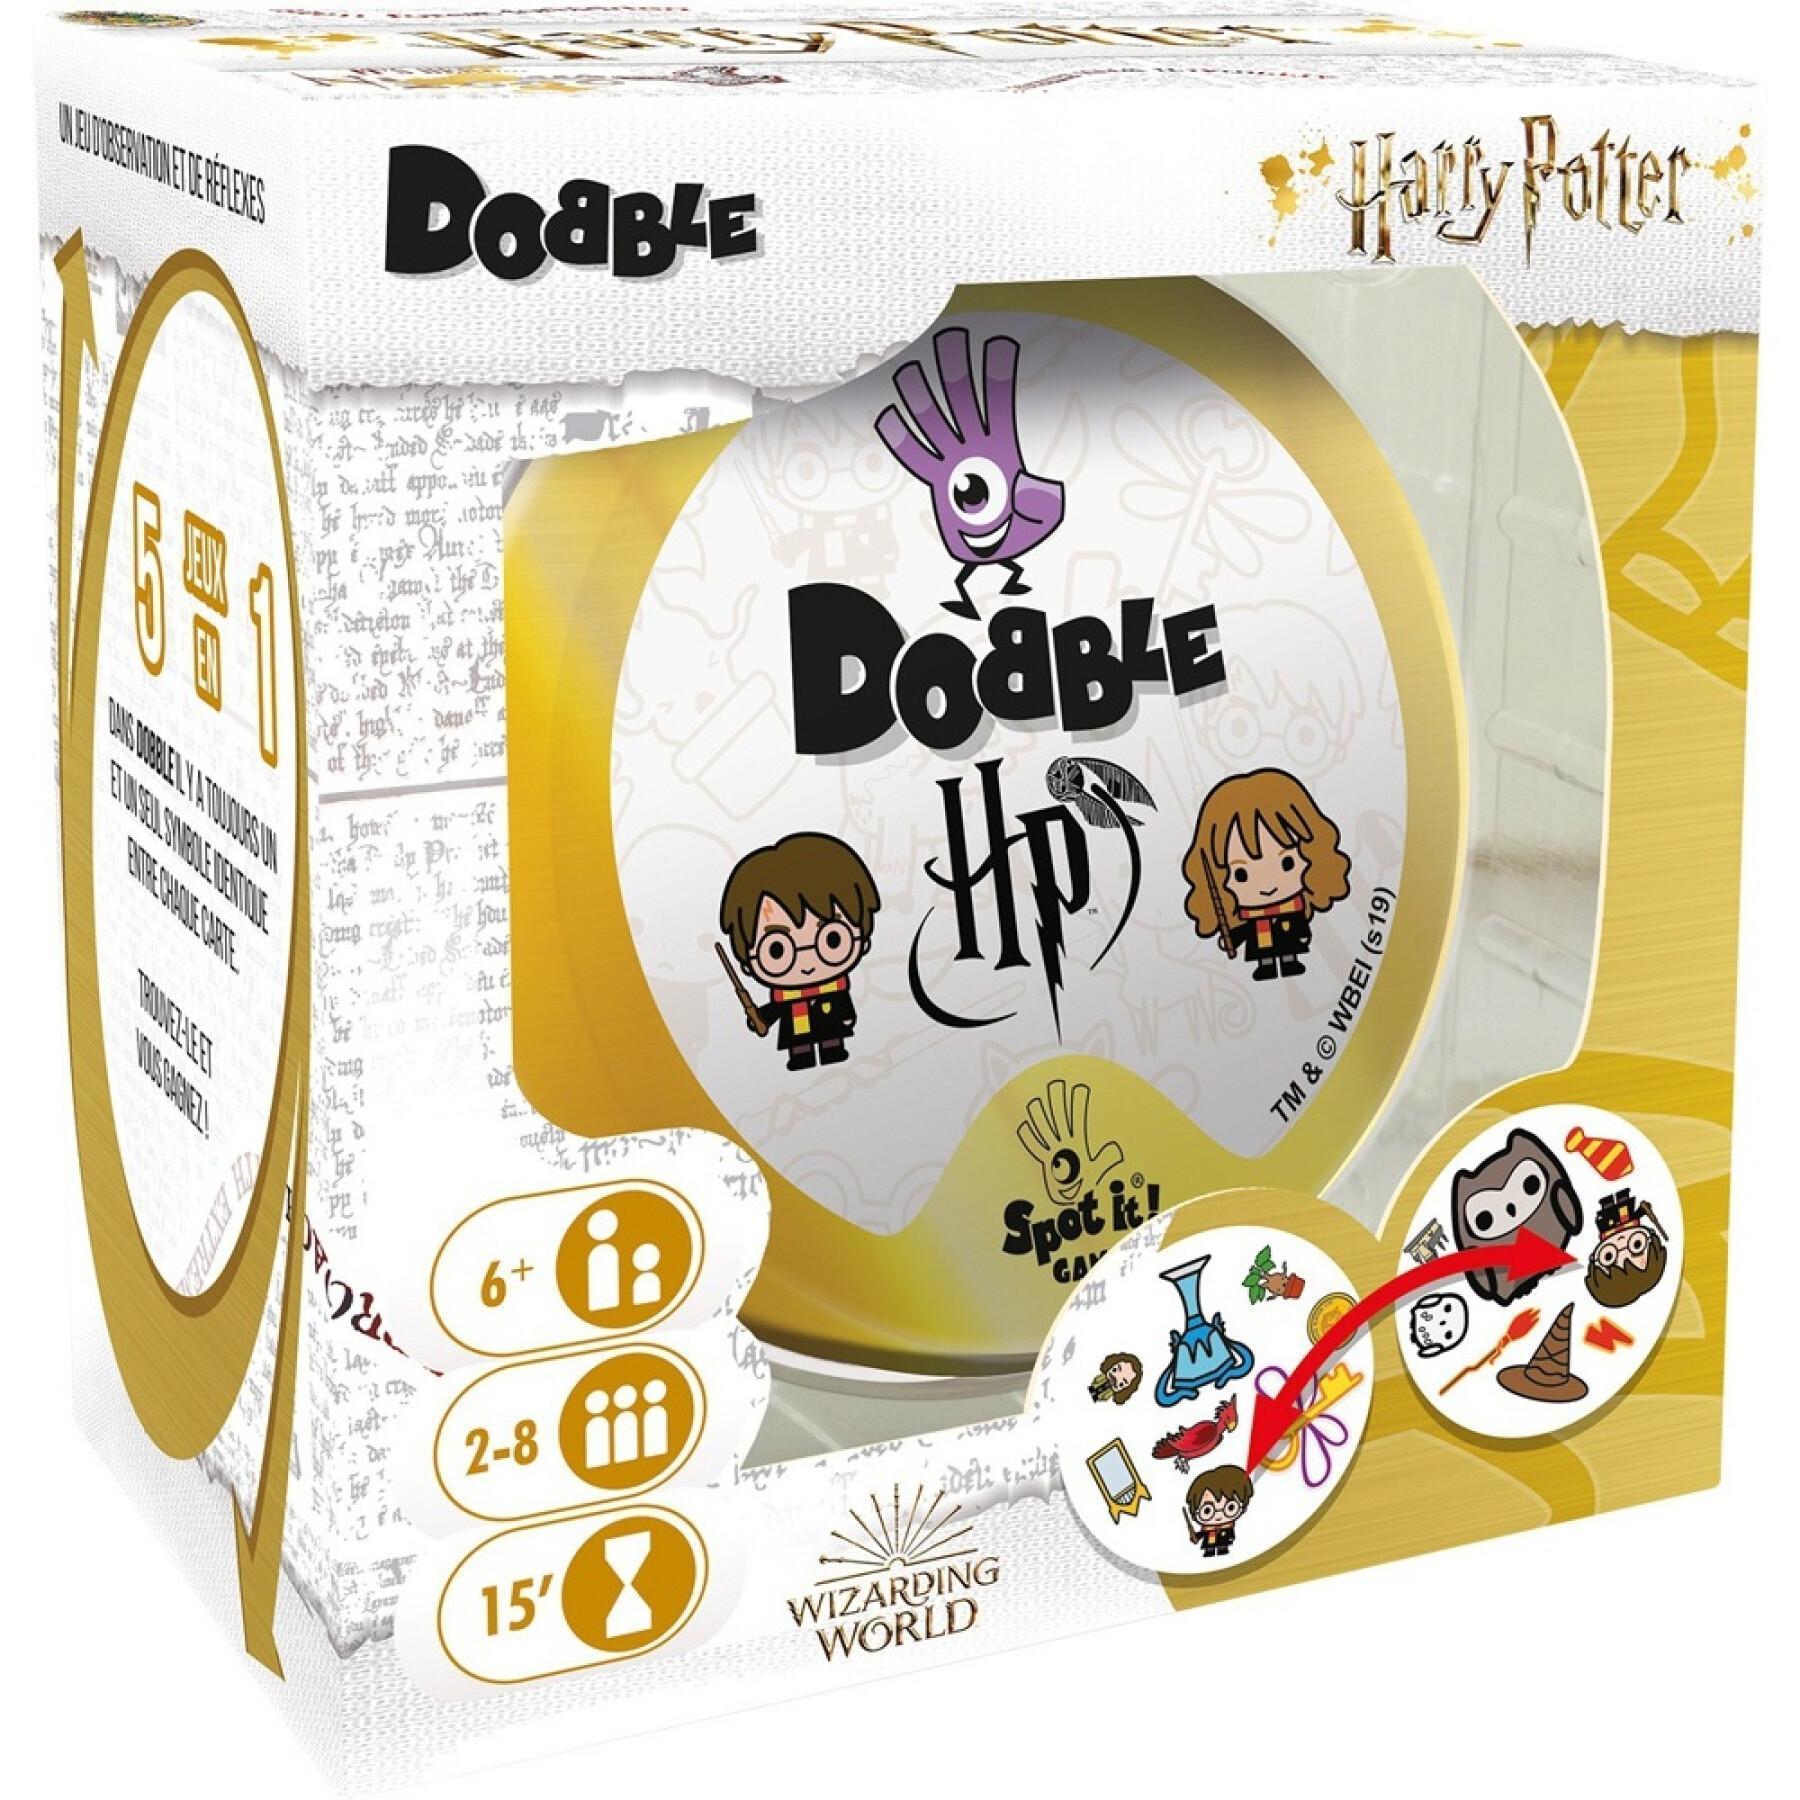 caixa do jogo de tabuleiro harry potter dobble Asmodee Editions